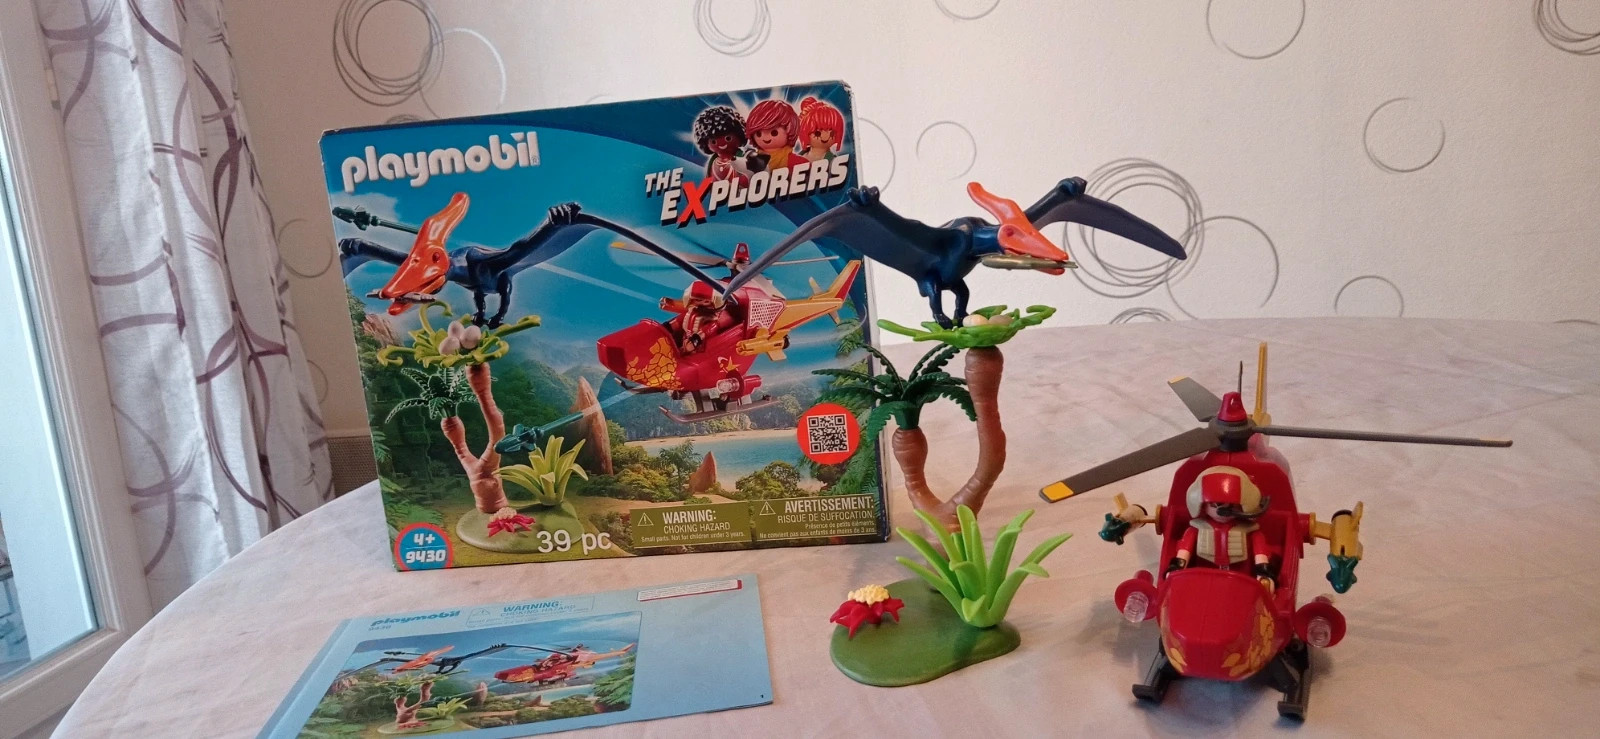 Hélicoptère et Ptéranodon - 9430, Playmobil